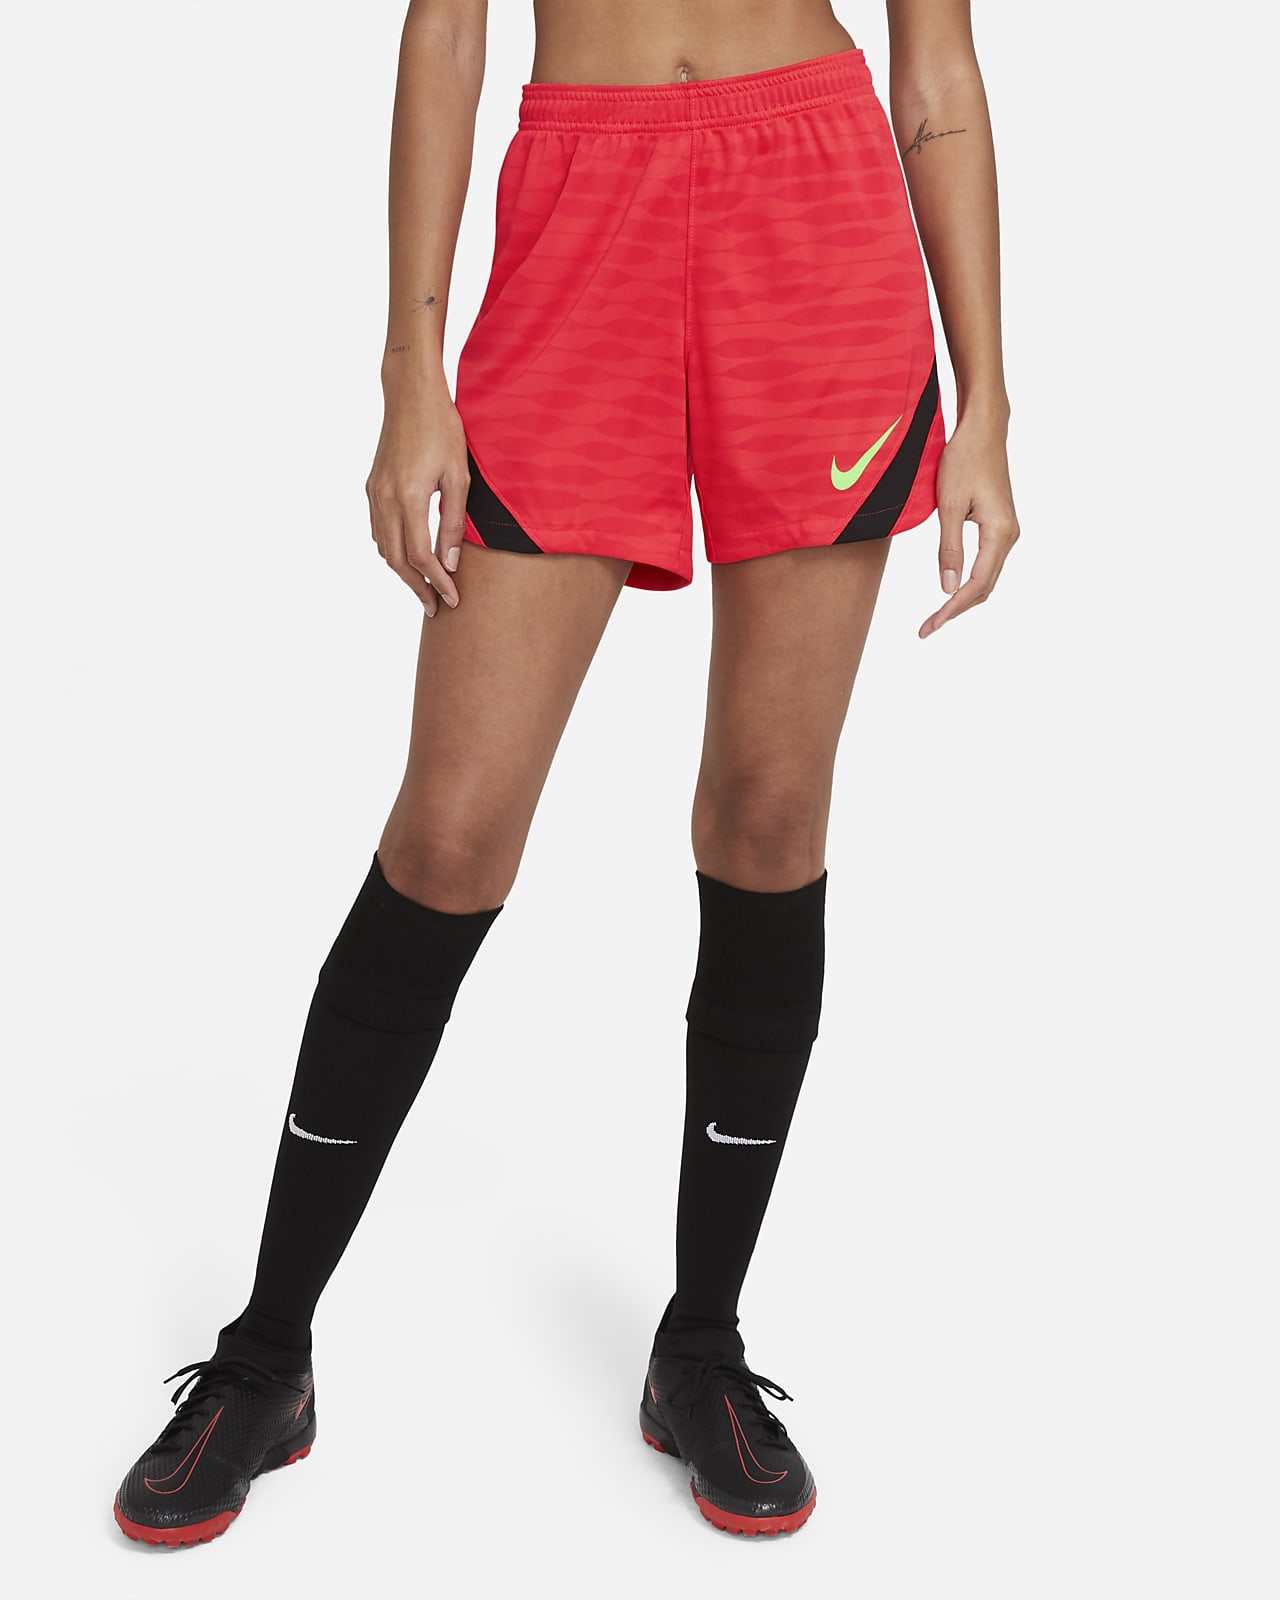 women's soccer shorts nike